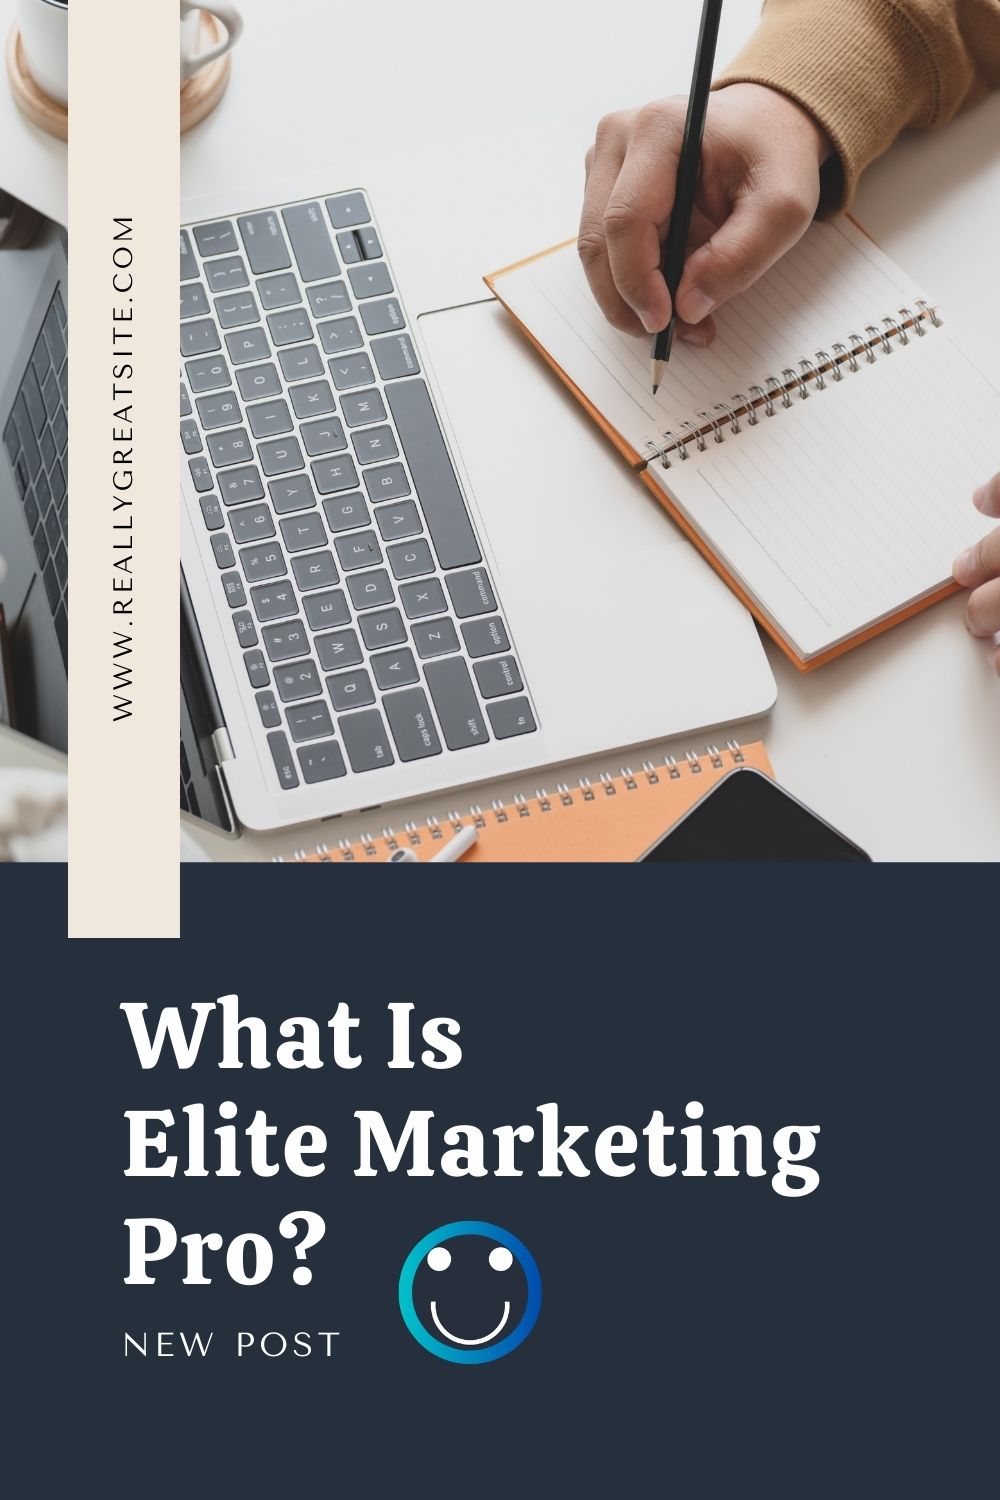 What Is Elite Marketing Pro?